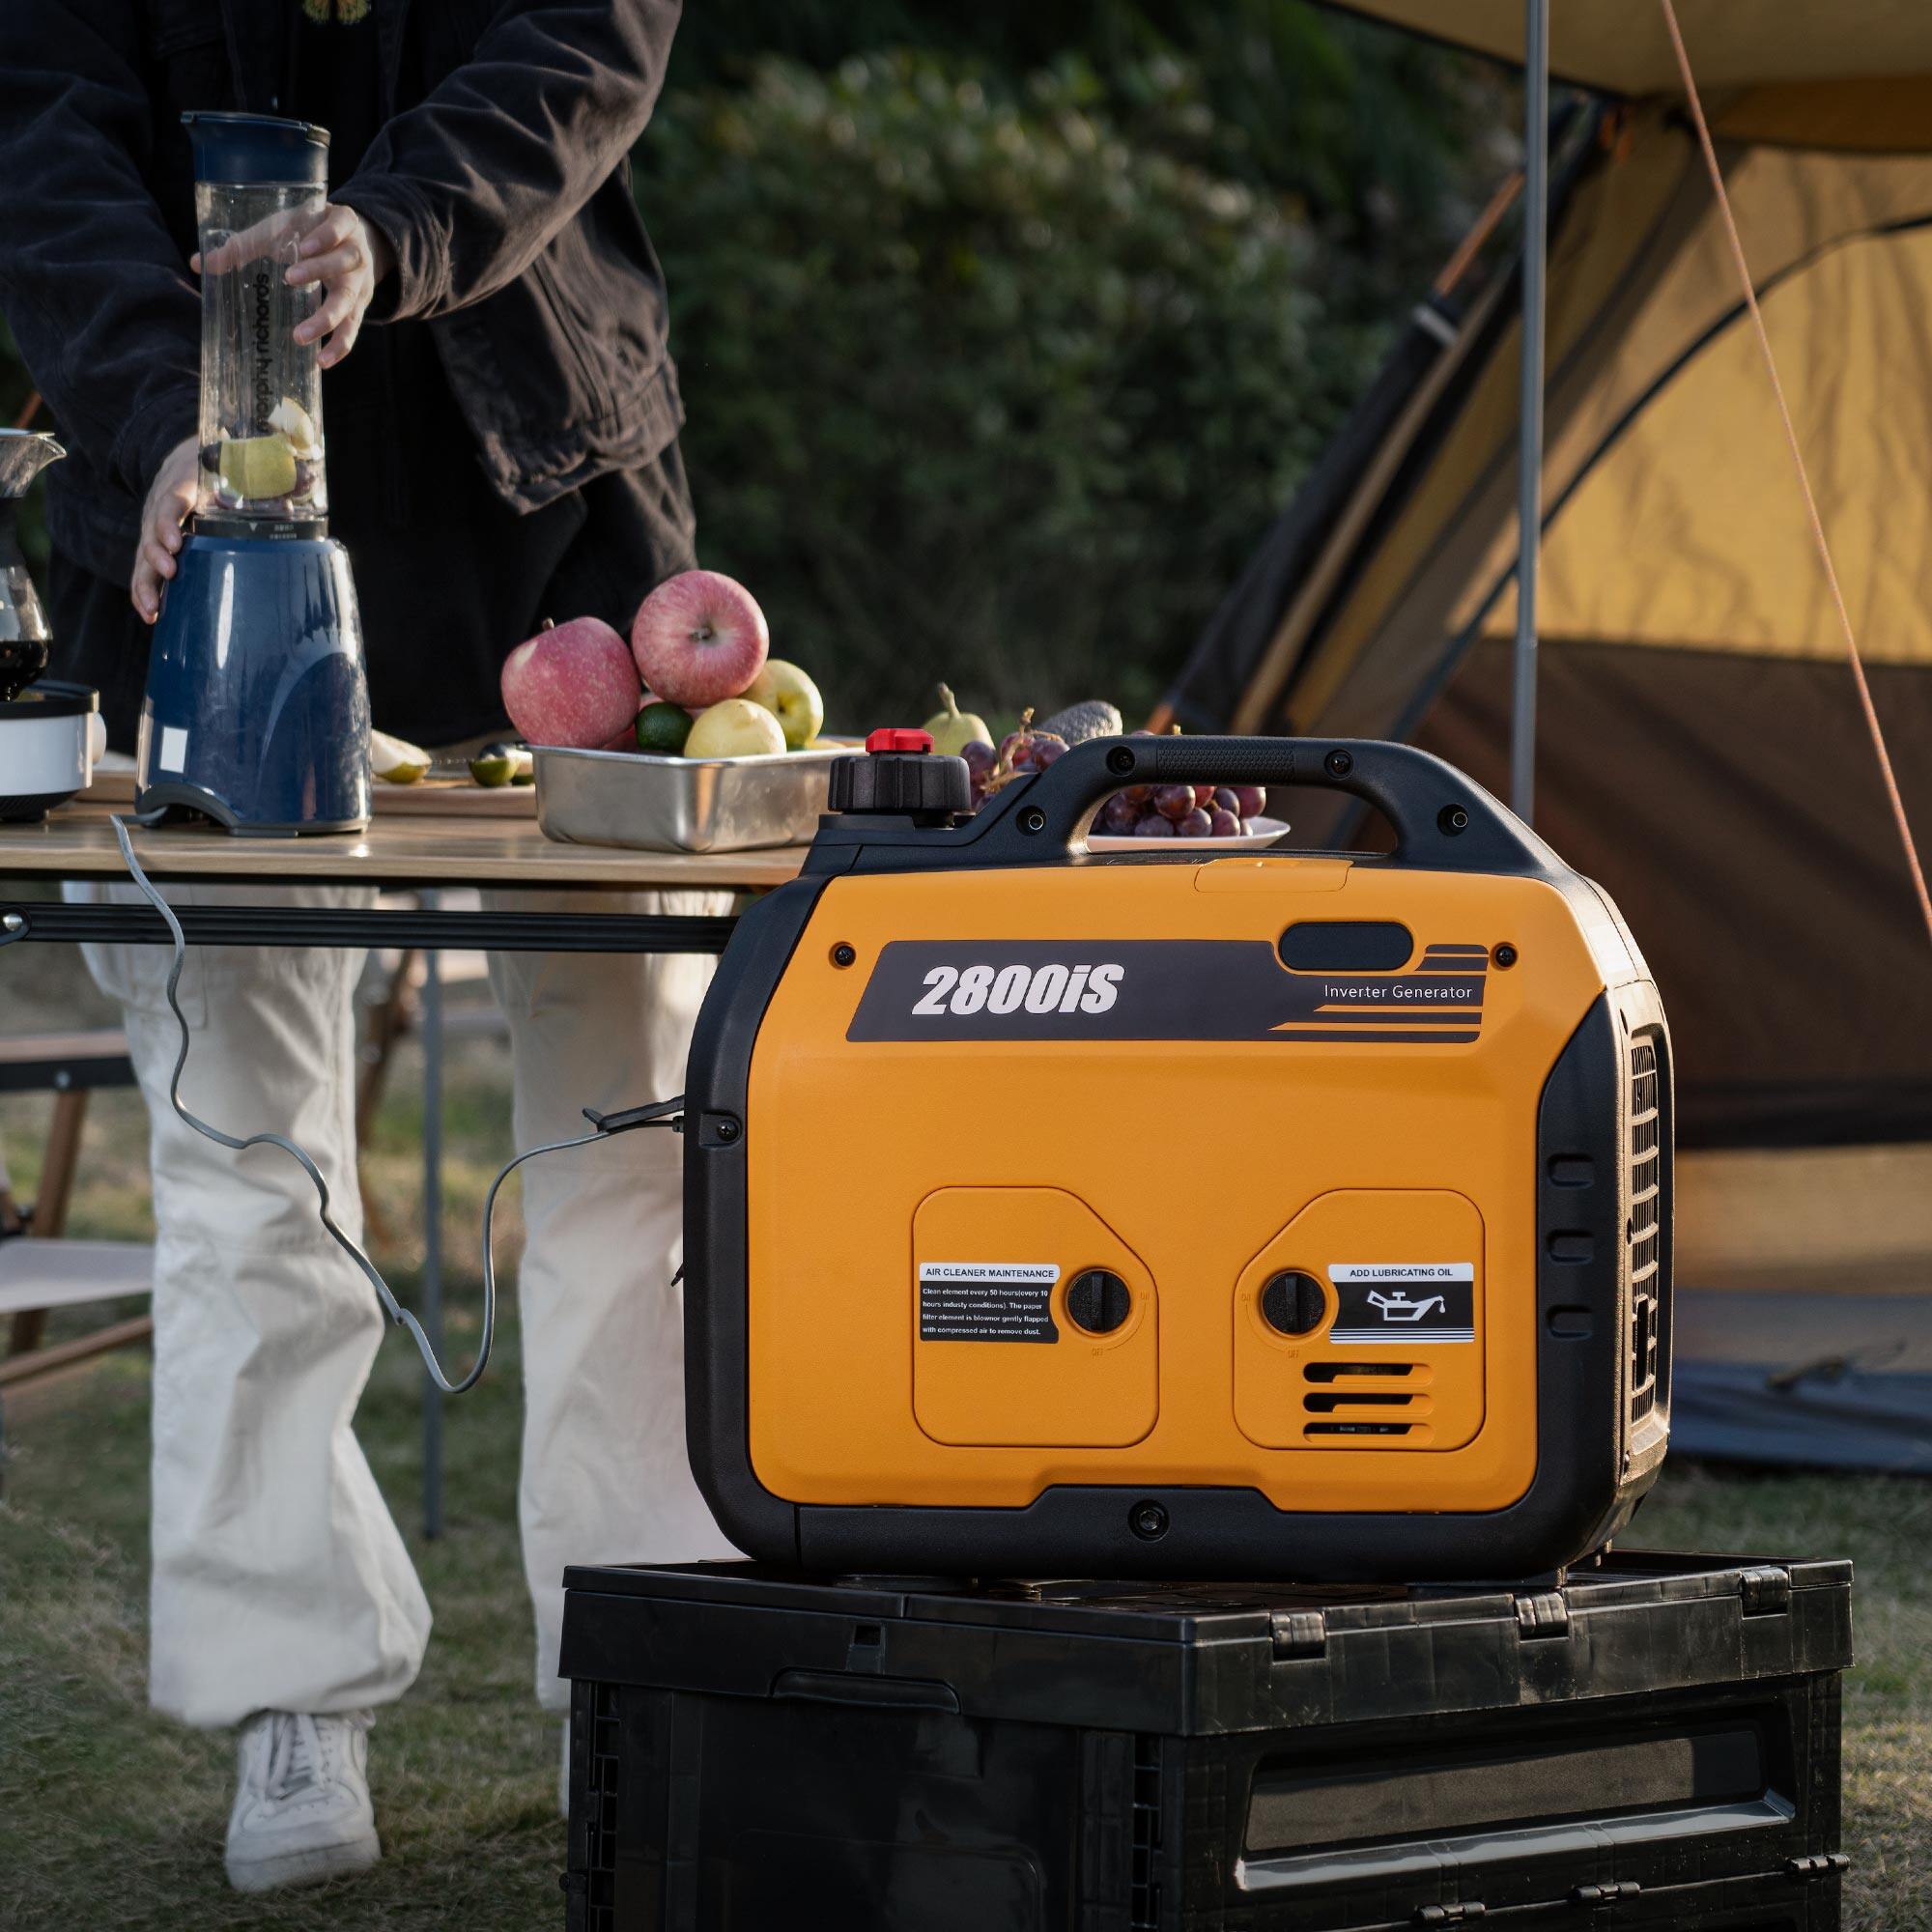 maXpeedingrods เครื่องกำเนิดไฟ Outdoor Camping อินเวอร์เตอร์ Quiet Digital Generator 2.8KVA Motorhome Caravan 3100-Watt Gas Powered เครื่องกำเนิดไฟฟ้า เครื่องปั่นไฟ (SKU# MXR2800IS-TH-V2)